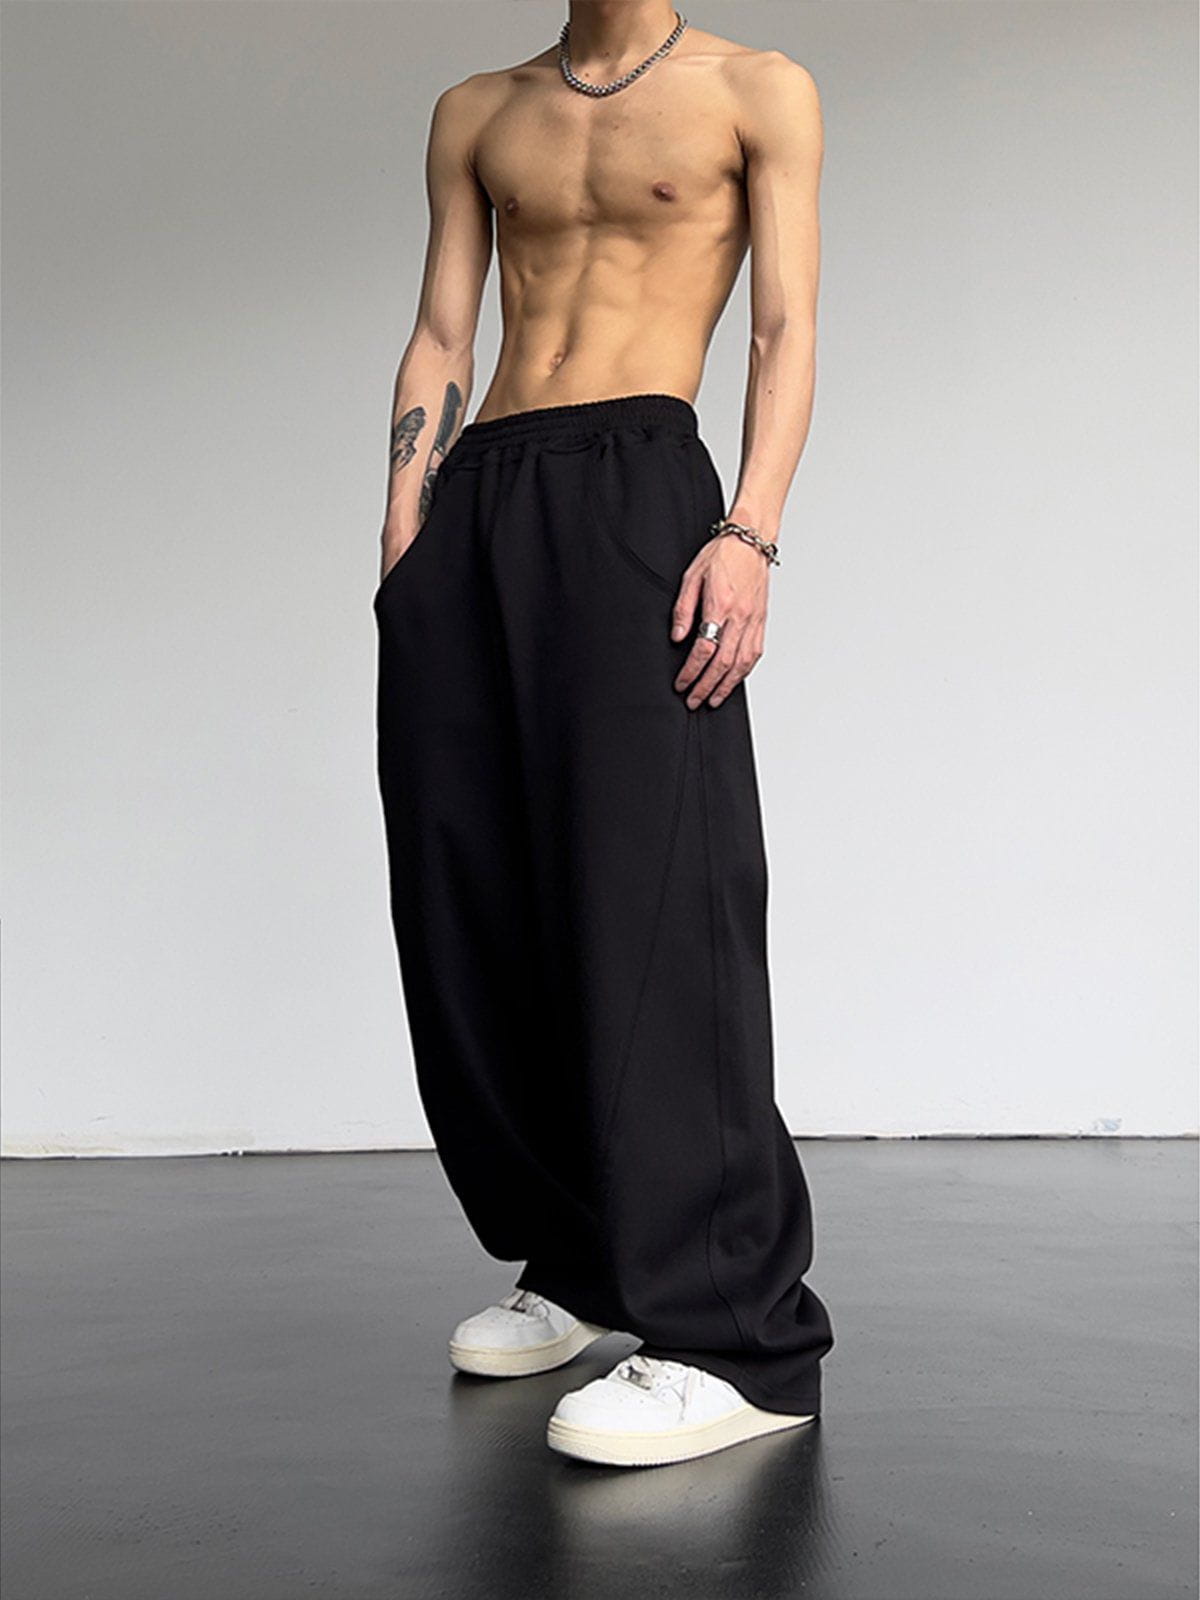 Majesda® - Loose High Waist Pants outfit ideas streetwear fashion